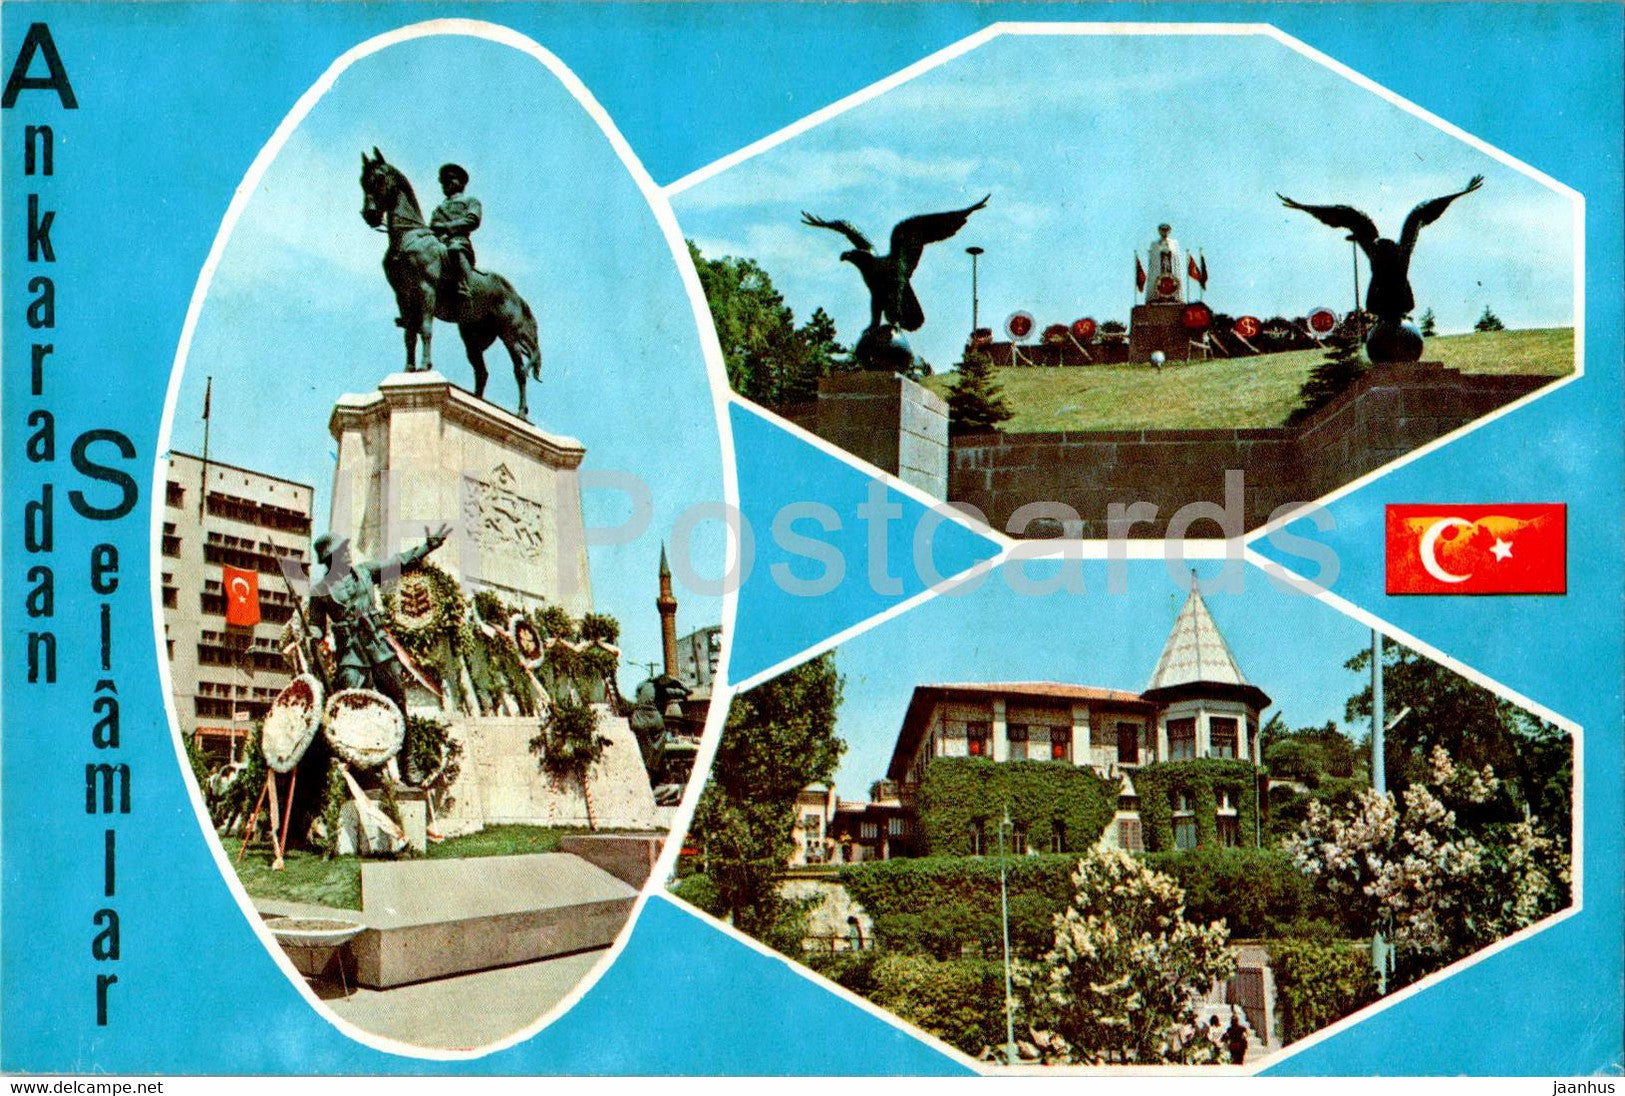 Ankara - Ankaradan Selamlar - Greetings from Ankara - multiview - 06-7 - Turkey - unused - JH Postcards